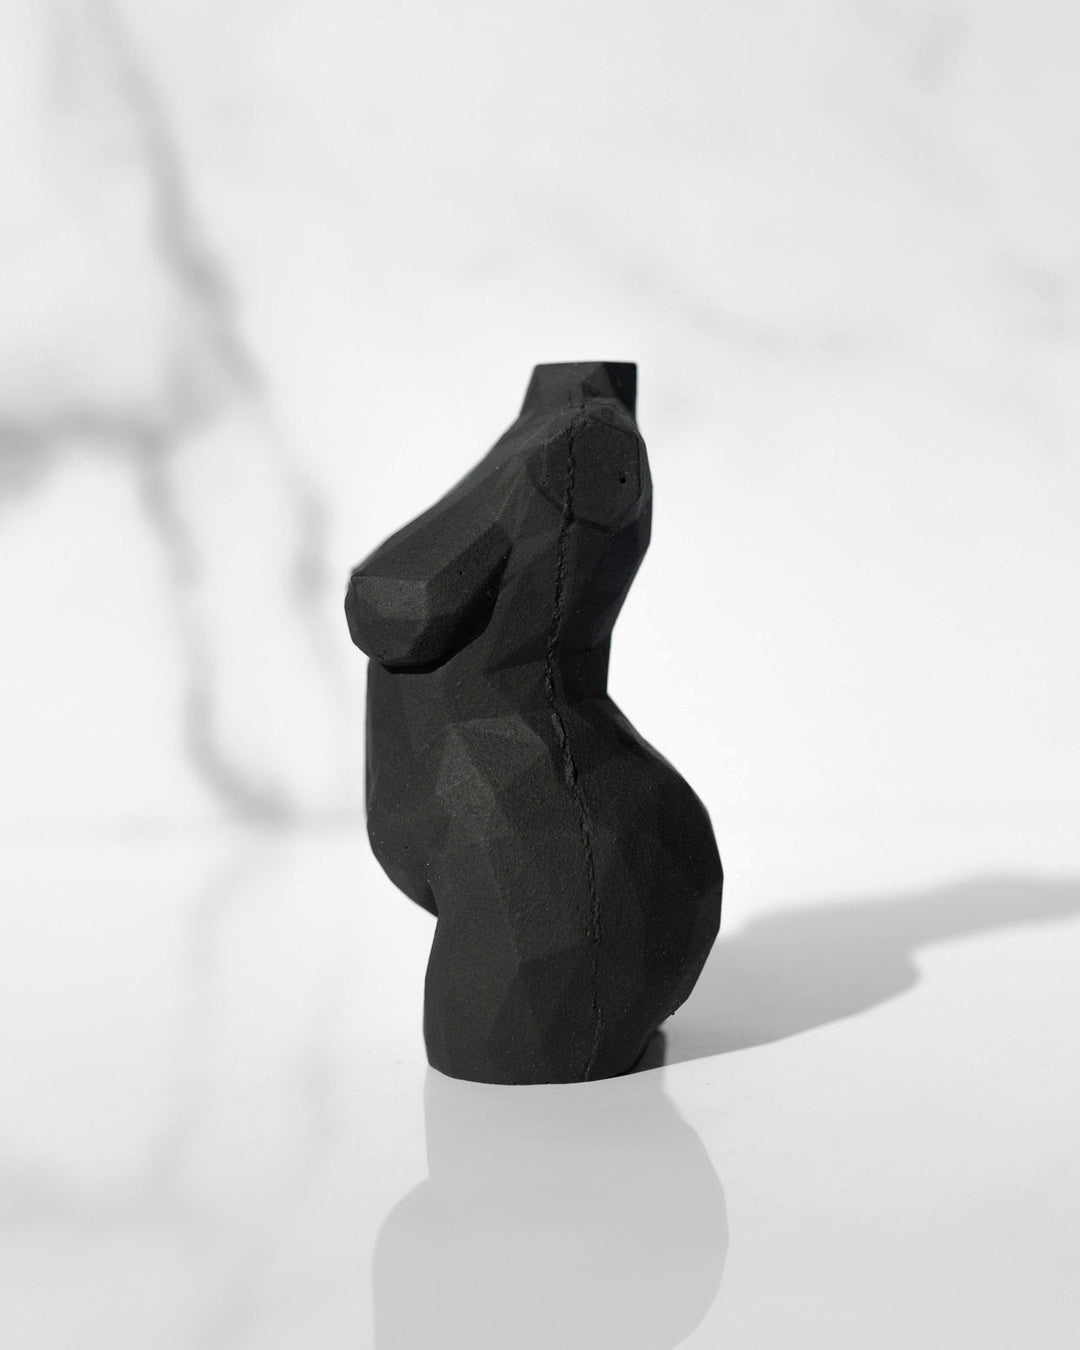 Hera Geometric Concrete Goddess Statue – Janet Gwen Designs